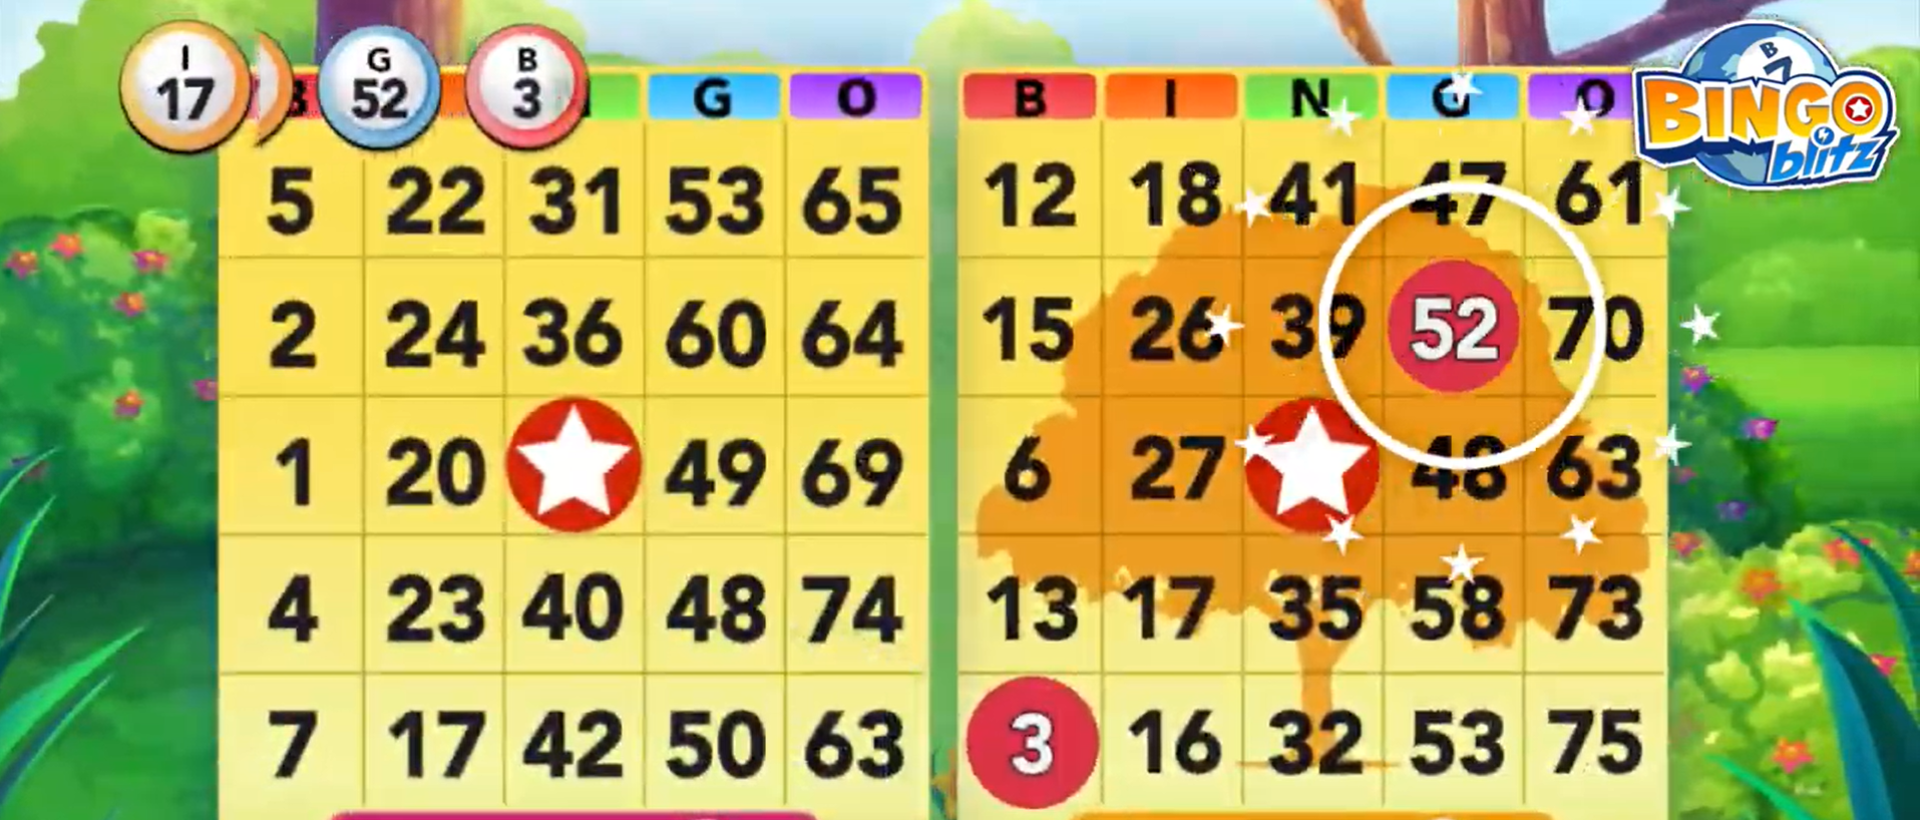 Download Bingo Blitz™ - Bingo Games on PC with NoxPlayer-Appcenter